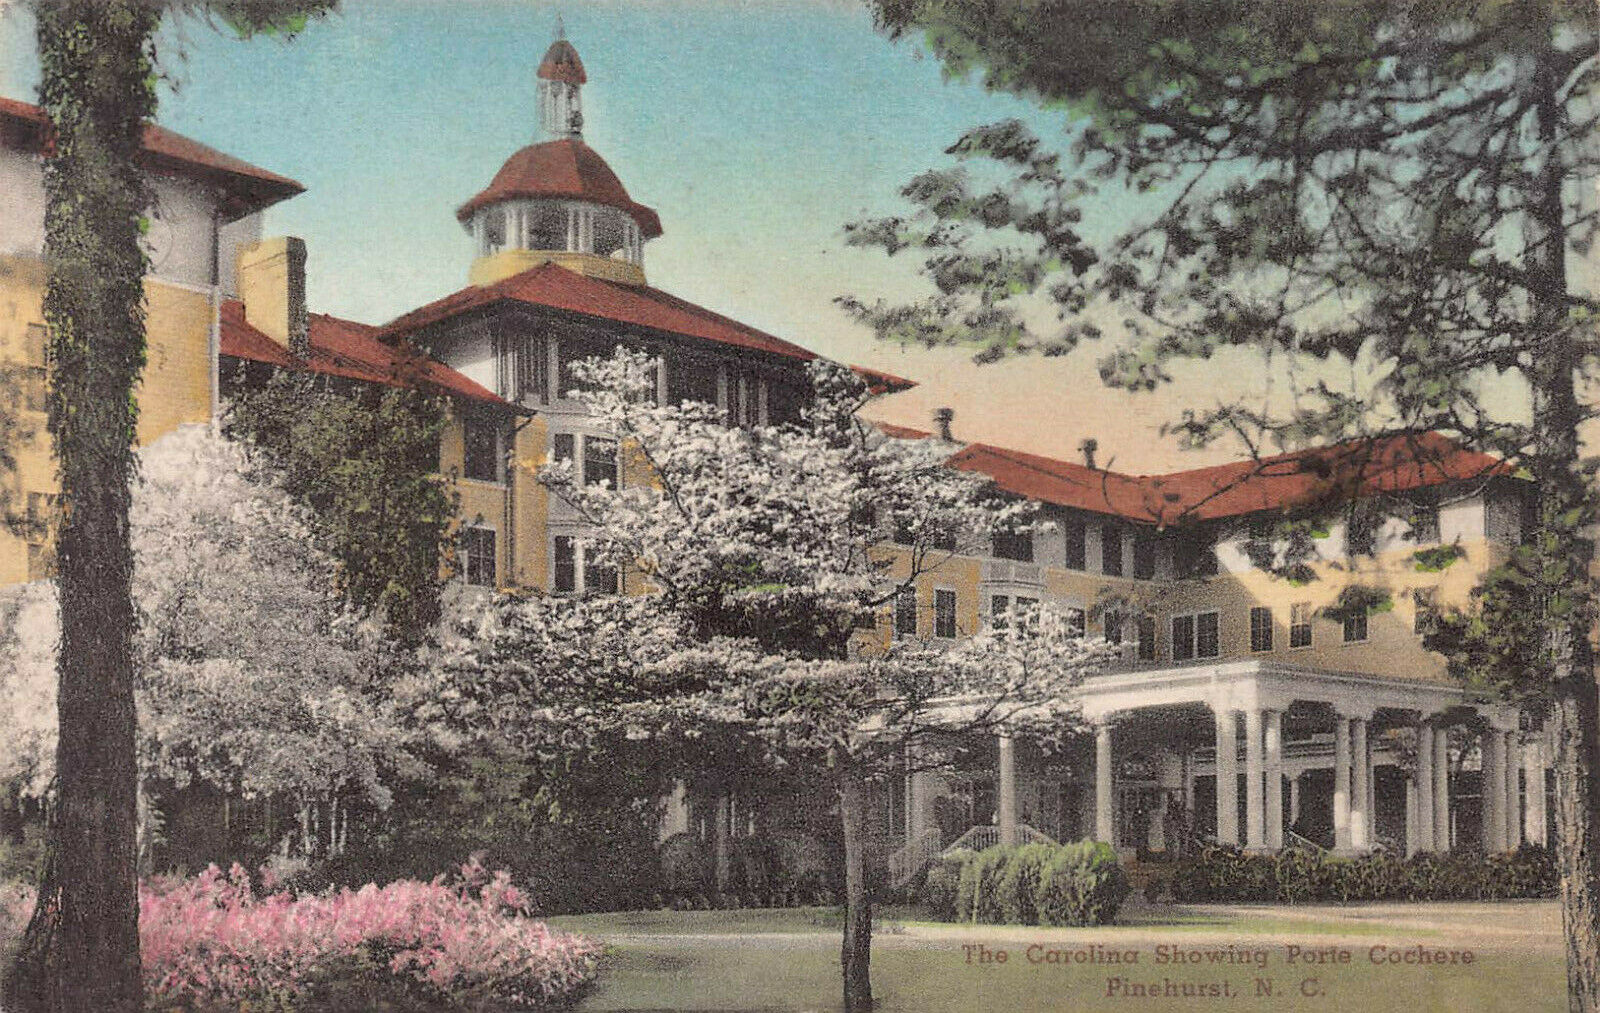 The Carolina, showing Port Cochere, Pinehurst, NC, Early Hand Colored Postcard